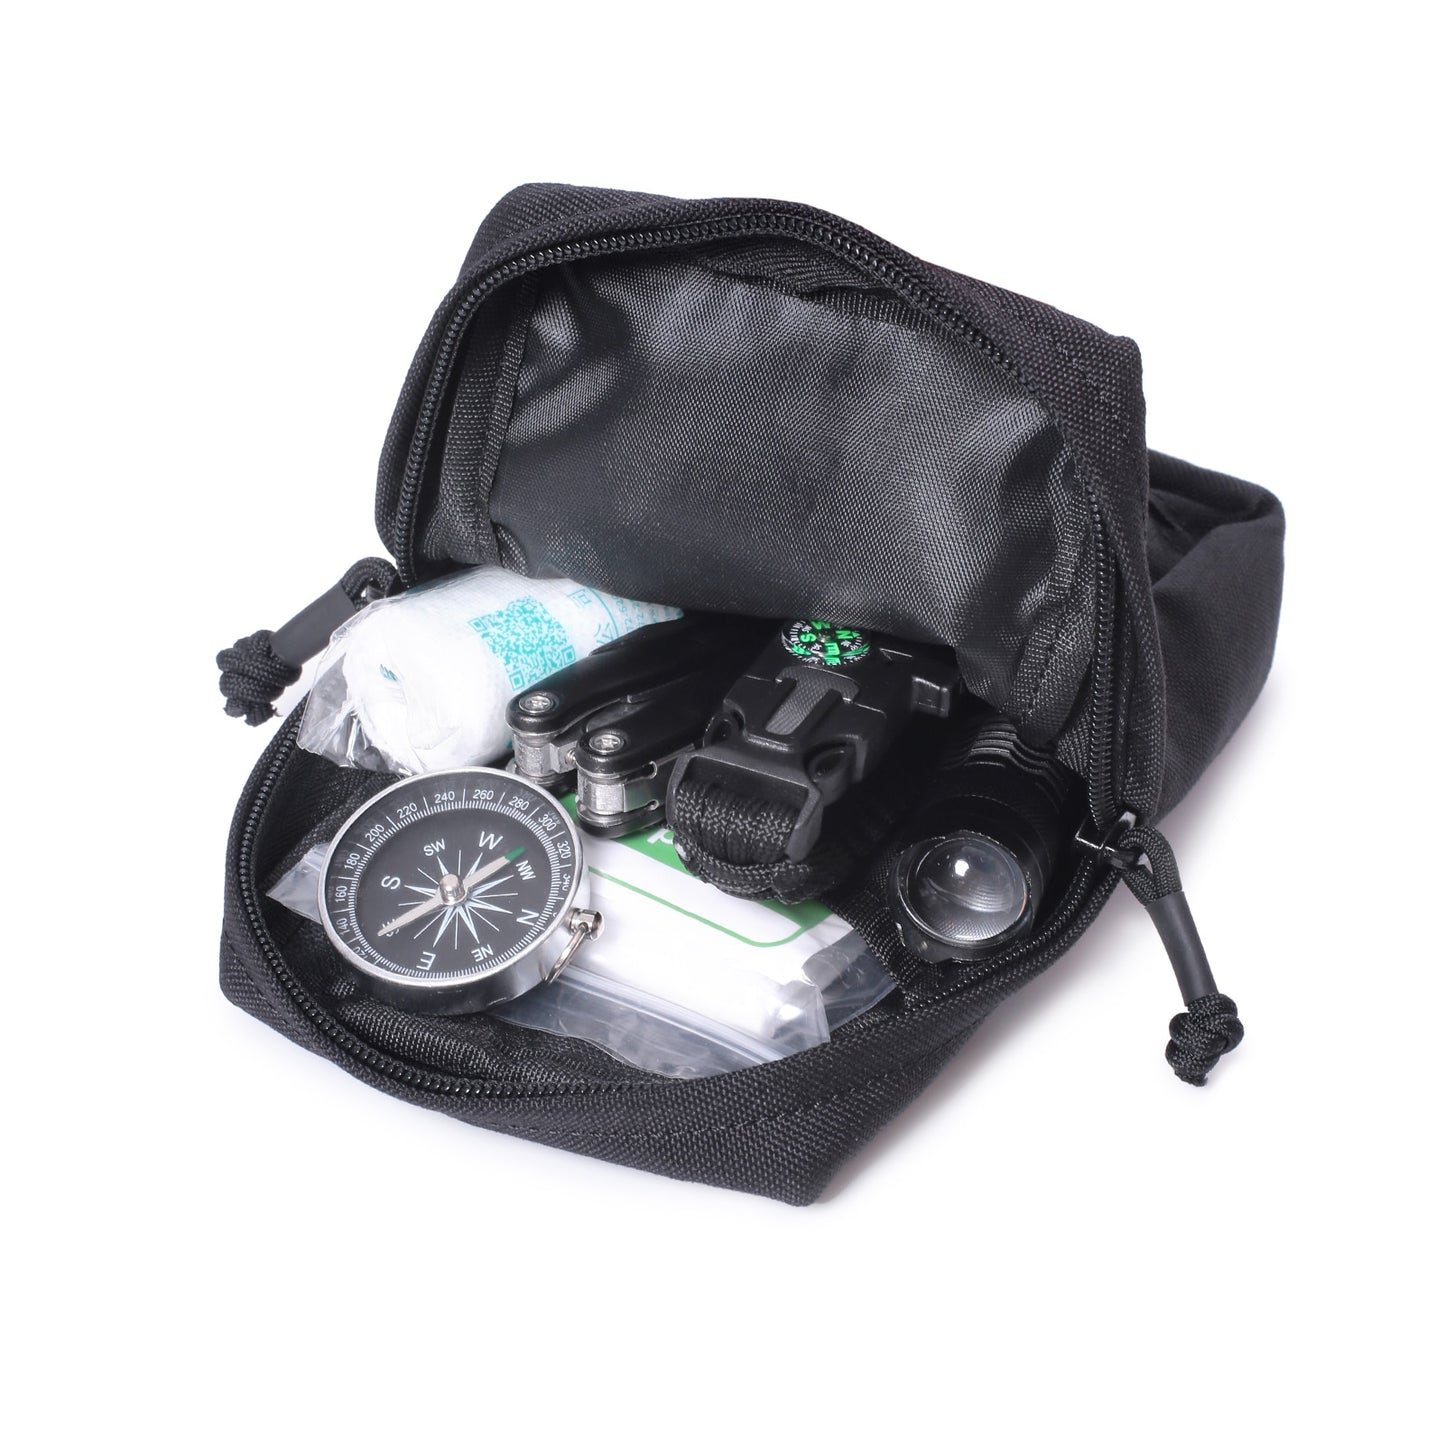 WALKTROCK Rigid Medical/Equipment bag for mollie system